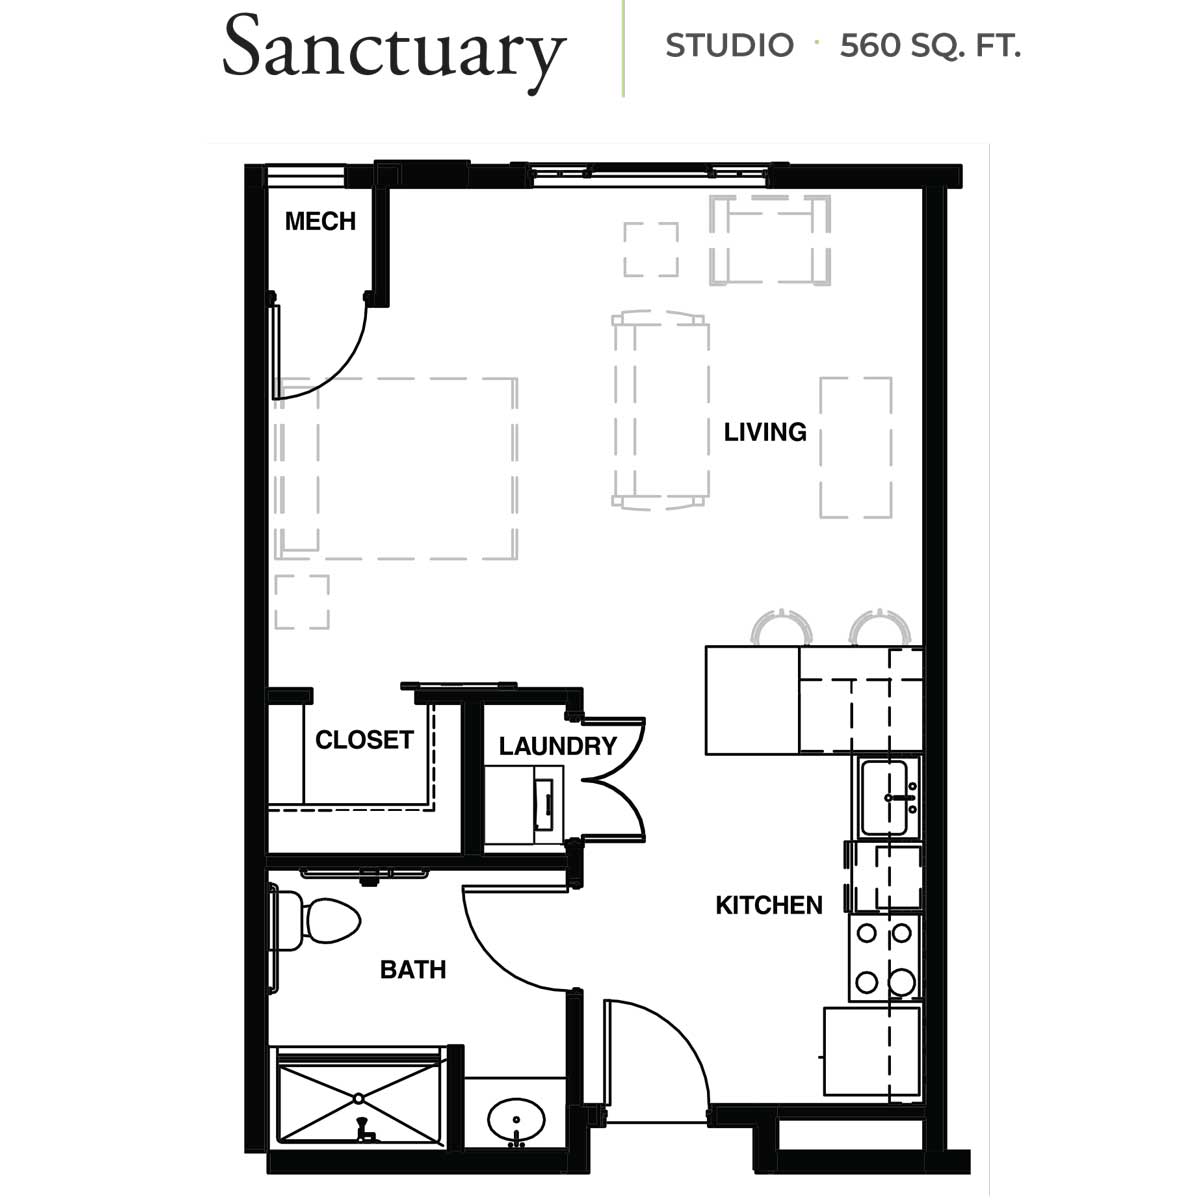 Sanctury studio apartment floor plan featuring a living area, kitchen, bath, closet, and laundry.